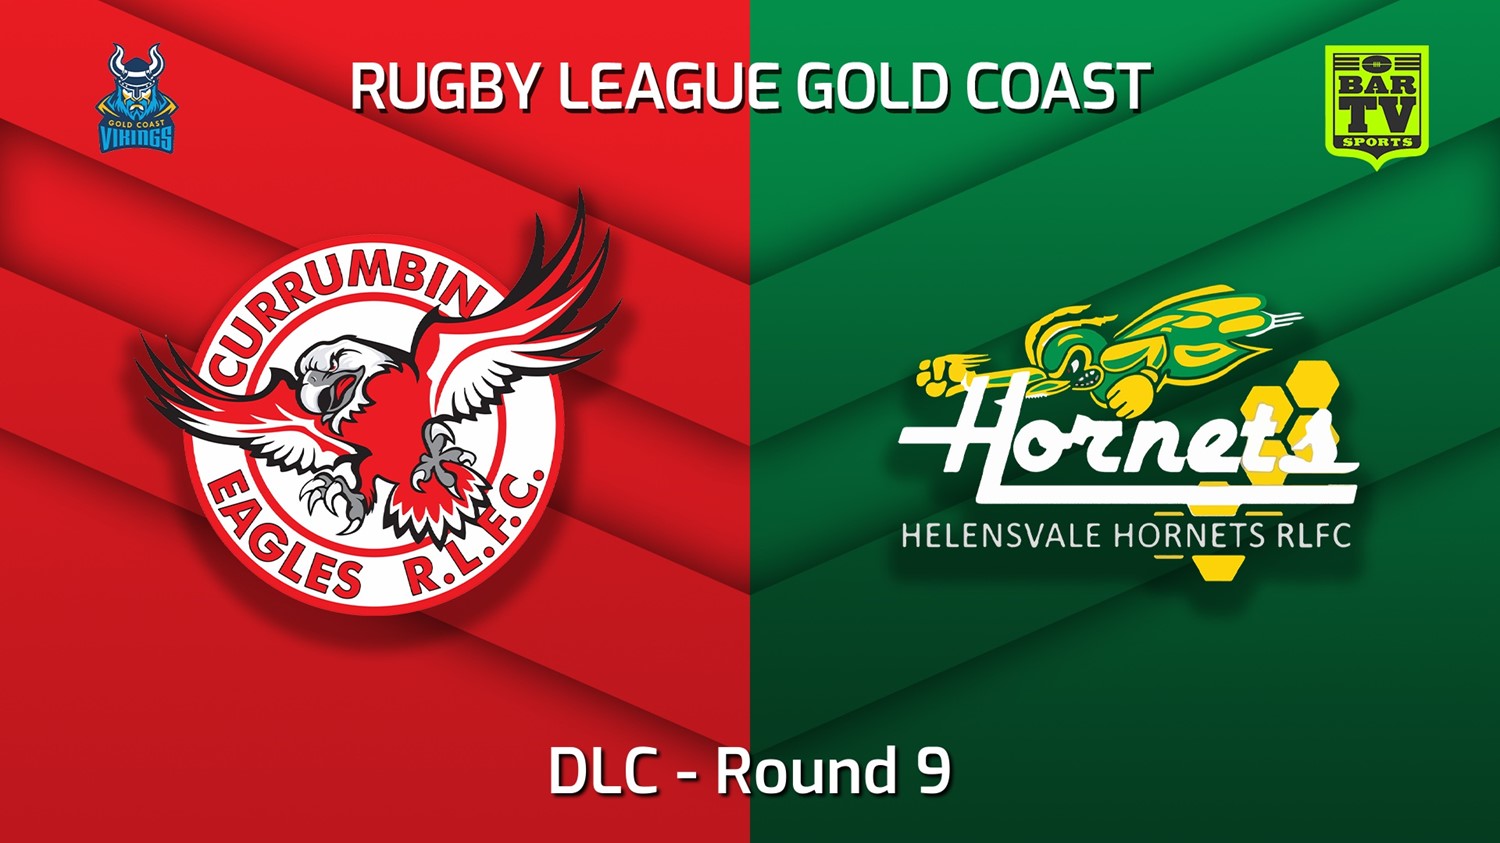 220605-Gold Coast Round 9 - DLC - Currumbin Eagles v Helensvale Hornets Slate Image